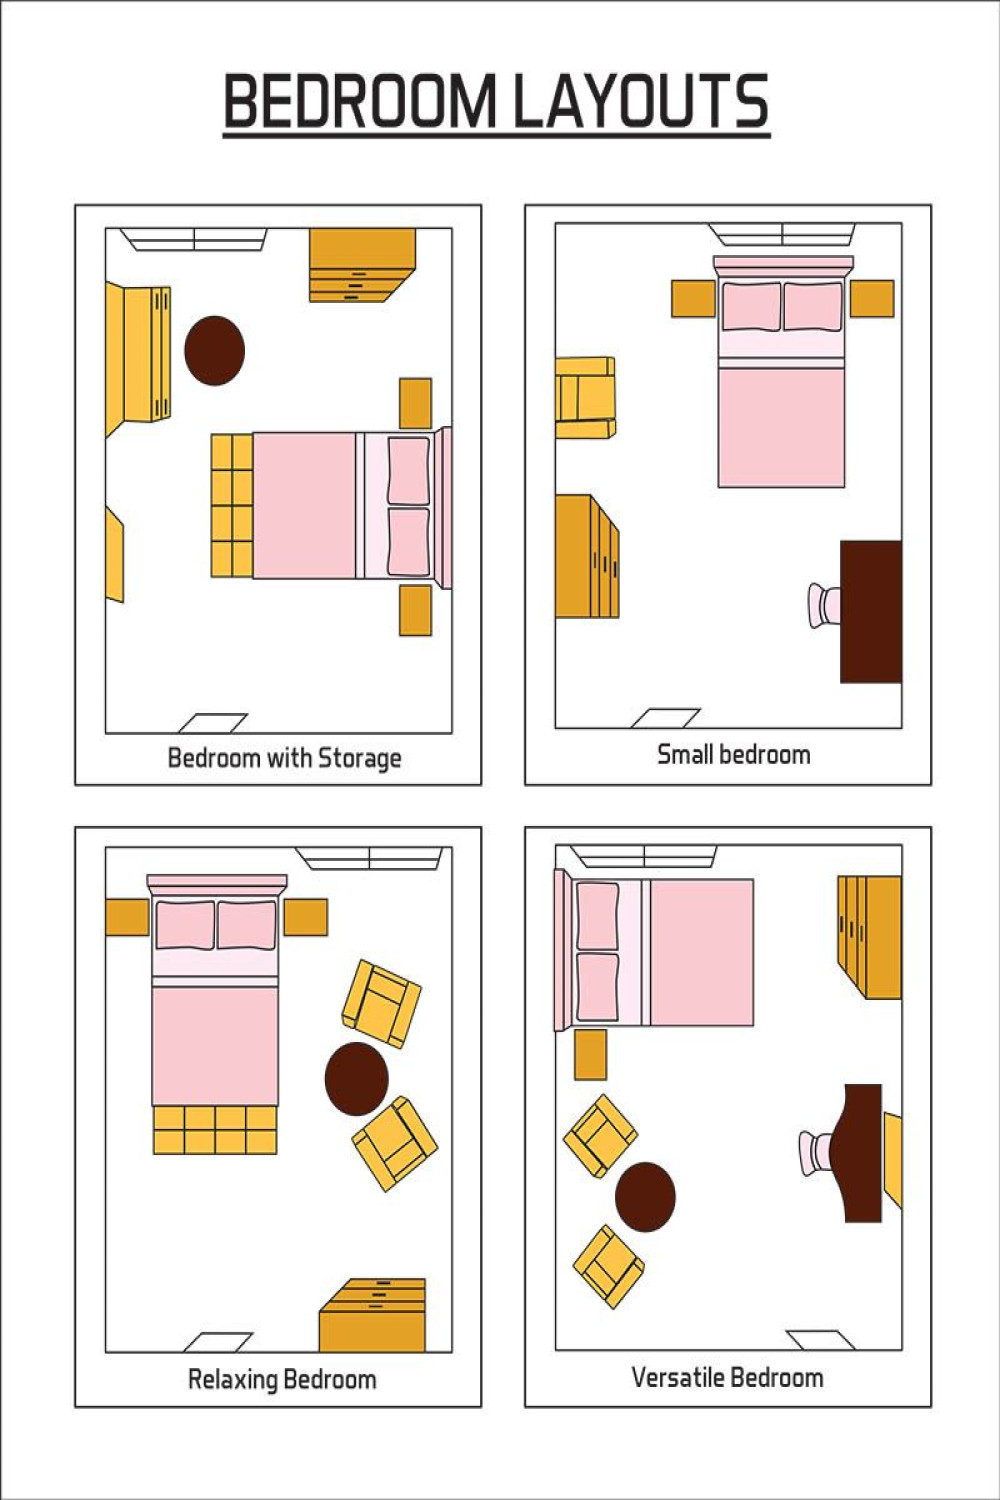 Bedroom Layout Ideas (Design Pictures) - Designing Idea  Bedroom